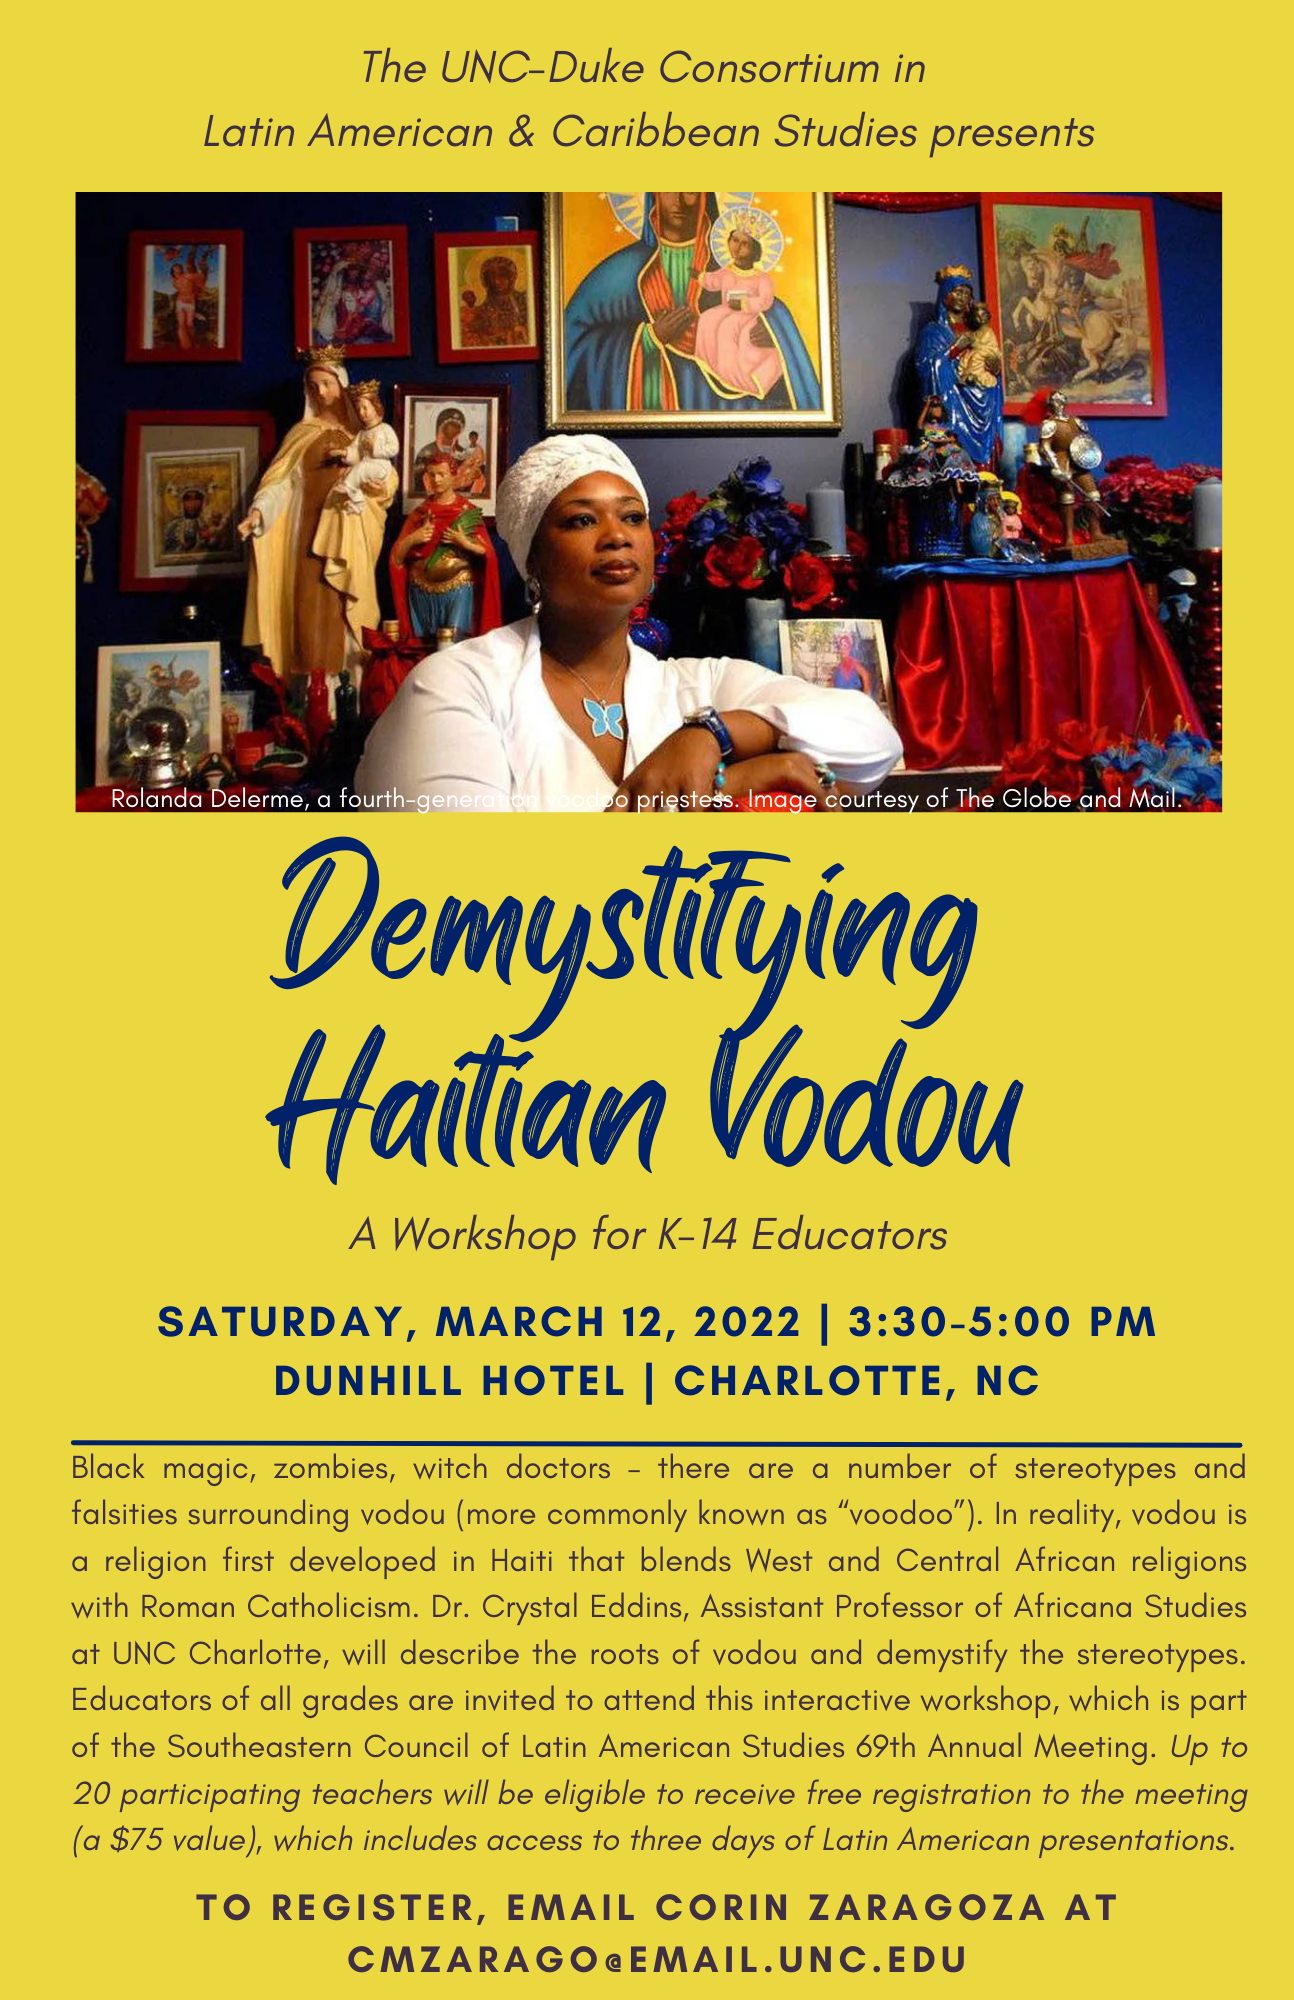 Demystifying Haitian Vodou, a Workshop for K-14 Educators